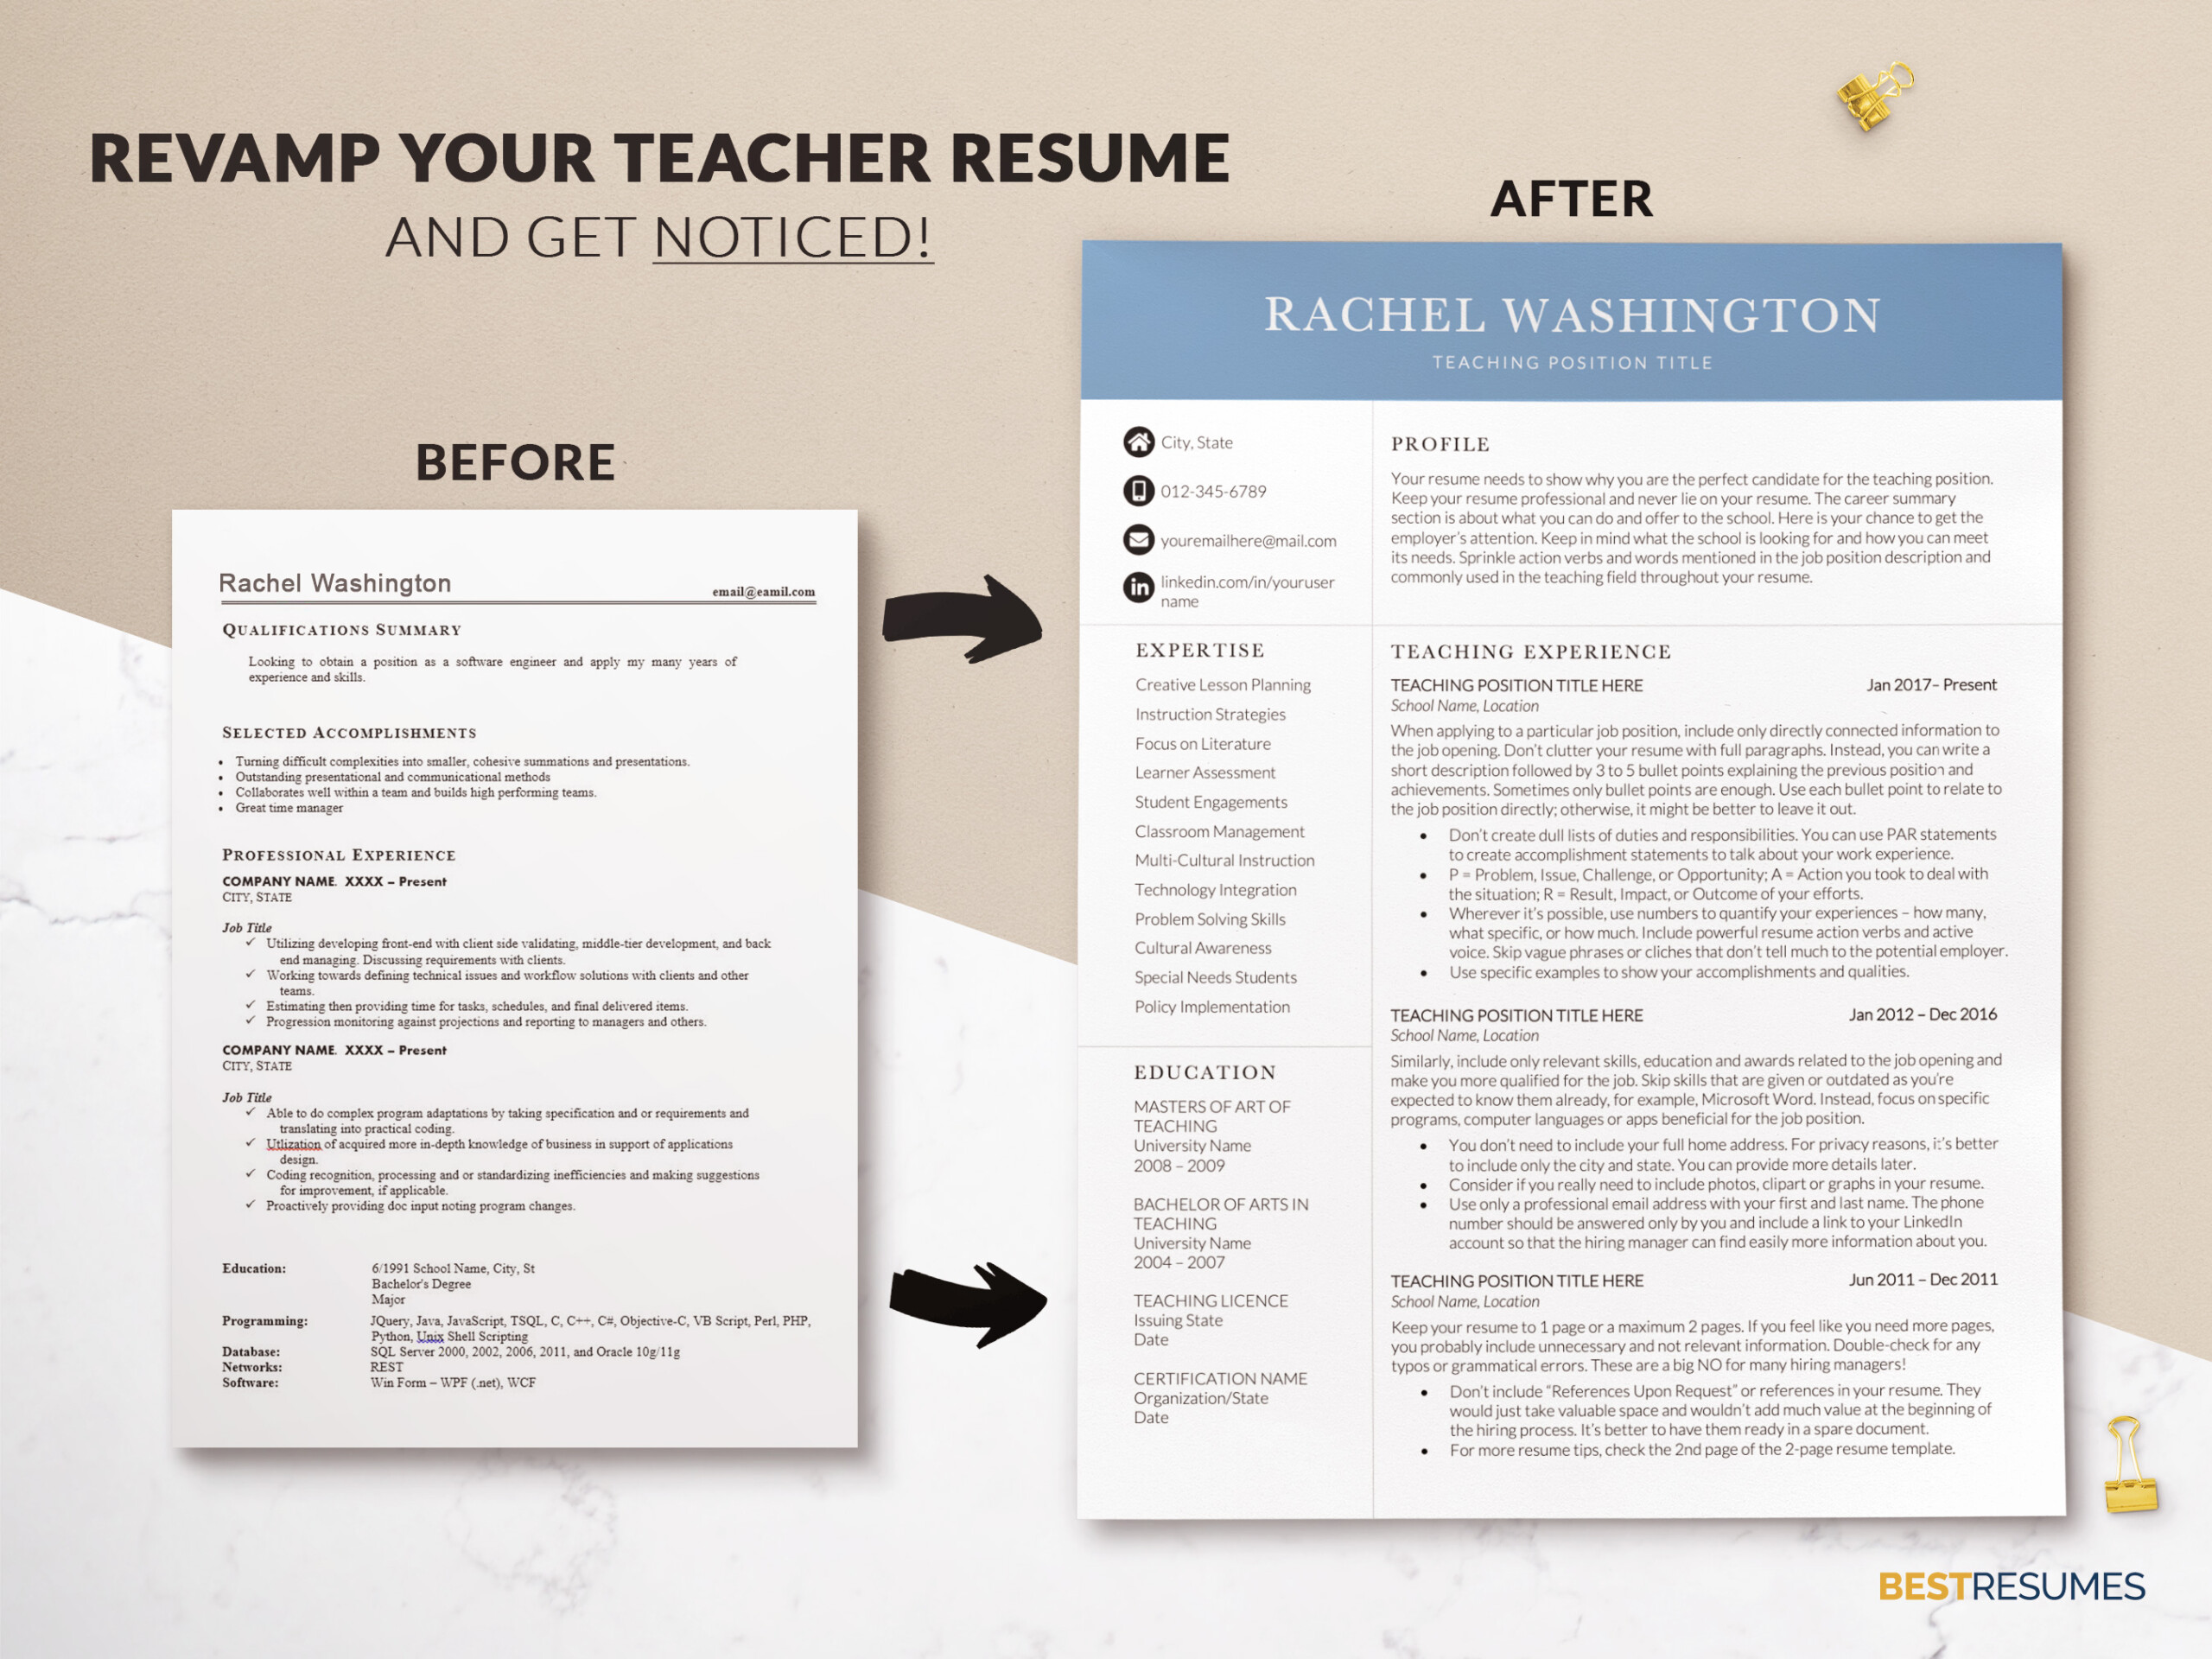 Resume Template for Educators and Teachers Job Revamp your Teacher Resume Rachel Washington